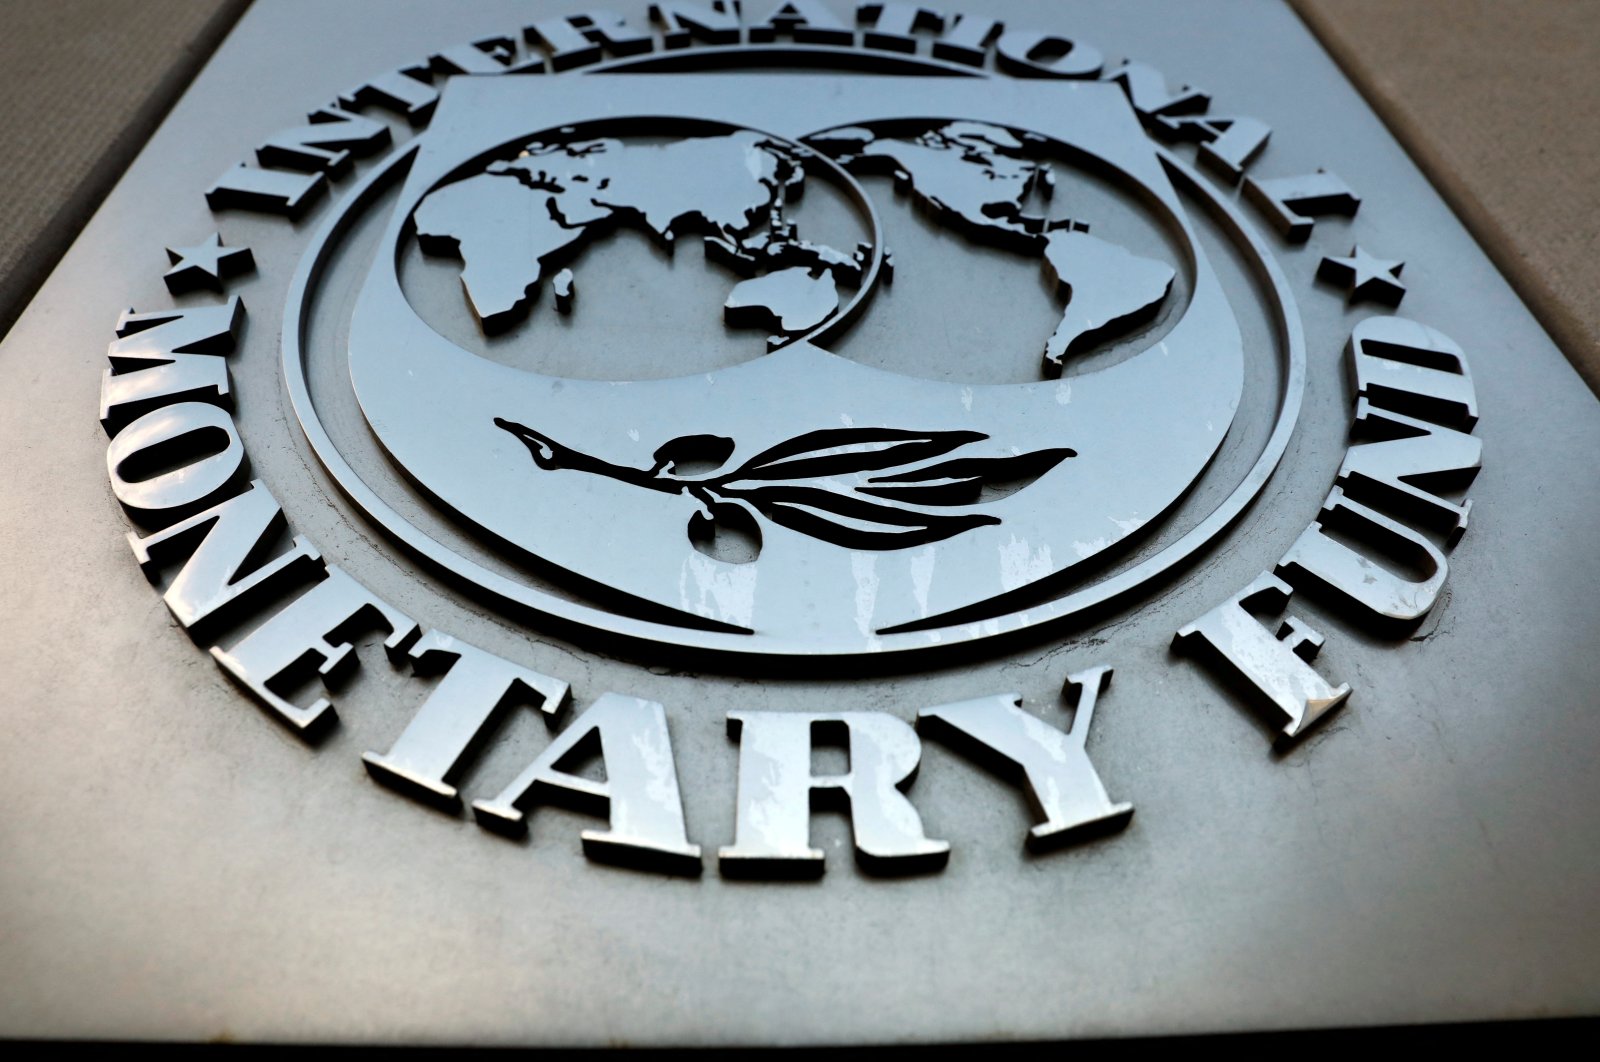 The International Monetary Fund (IMF) logo is seen outside its headquarters in Washington, D.C., U.S., Sept. 4, 2018. (Reuters Photo)